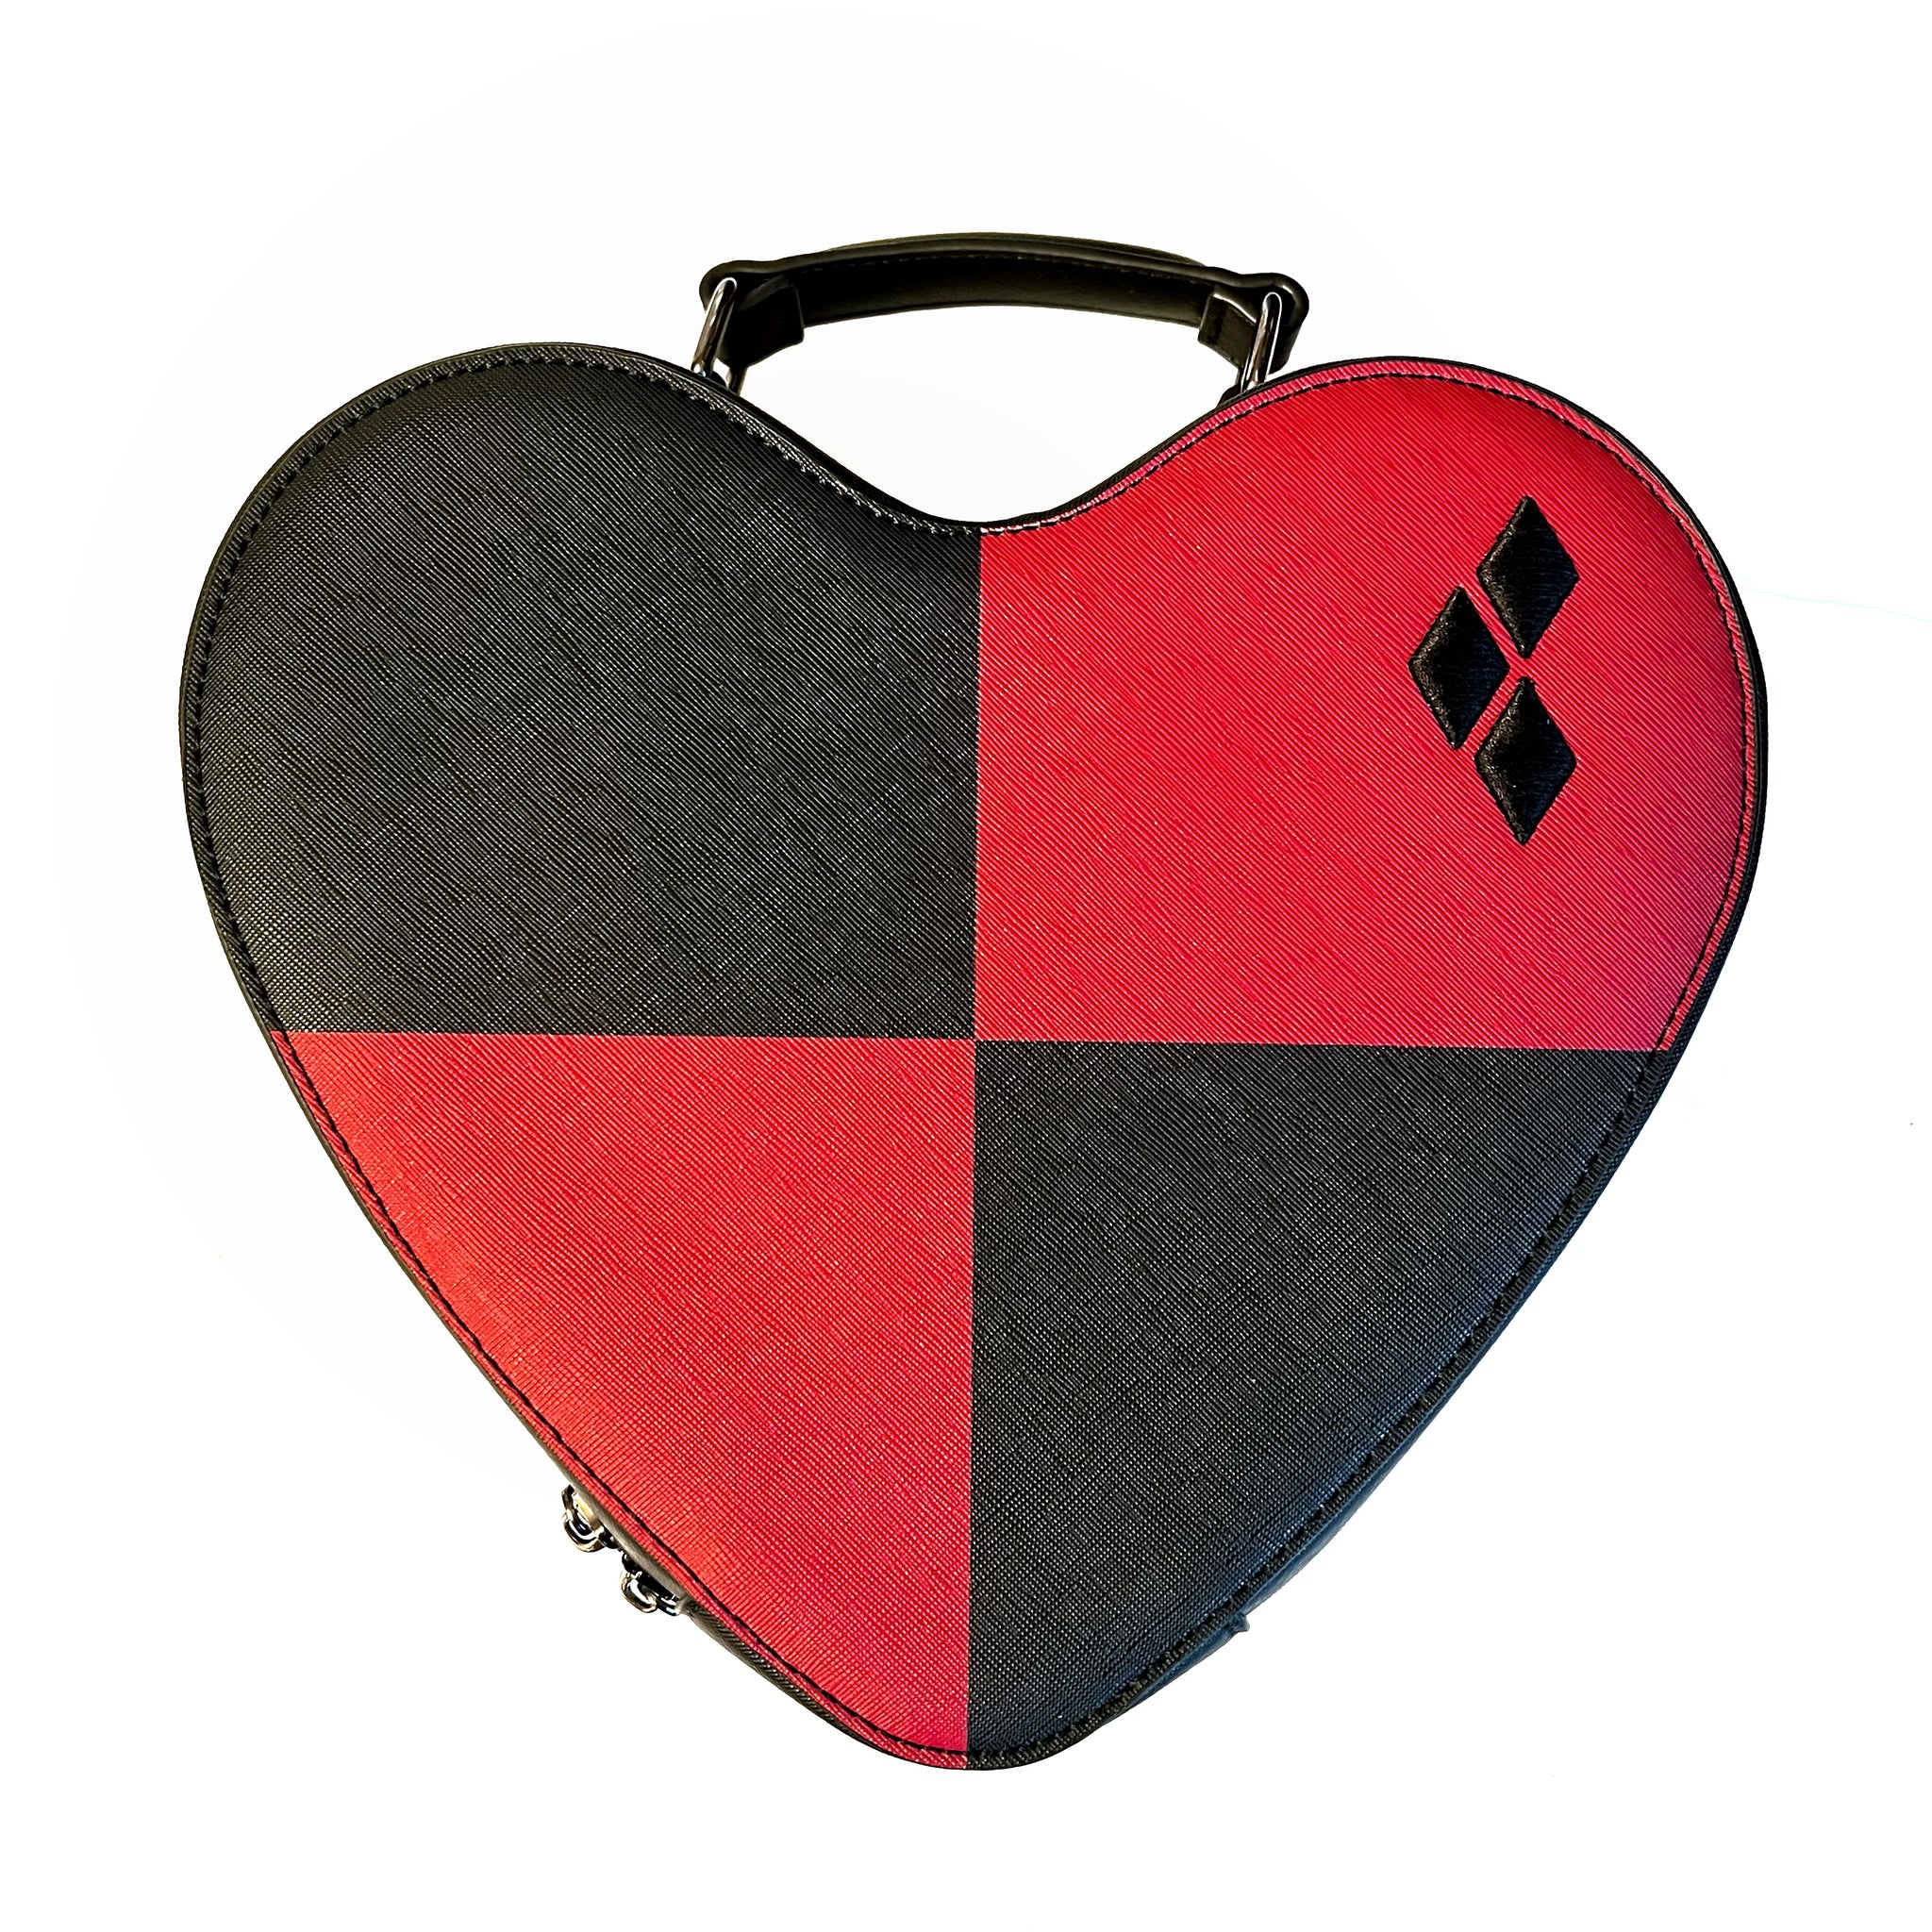 Jester Heart bag – Backstitch Bruja